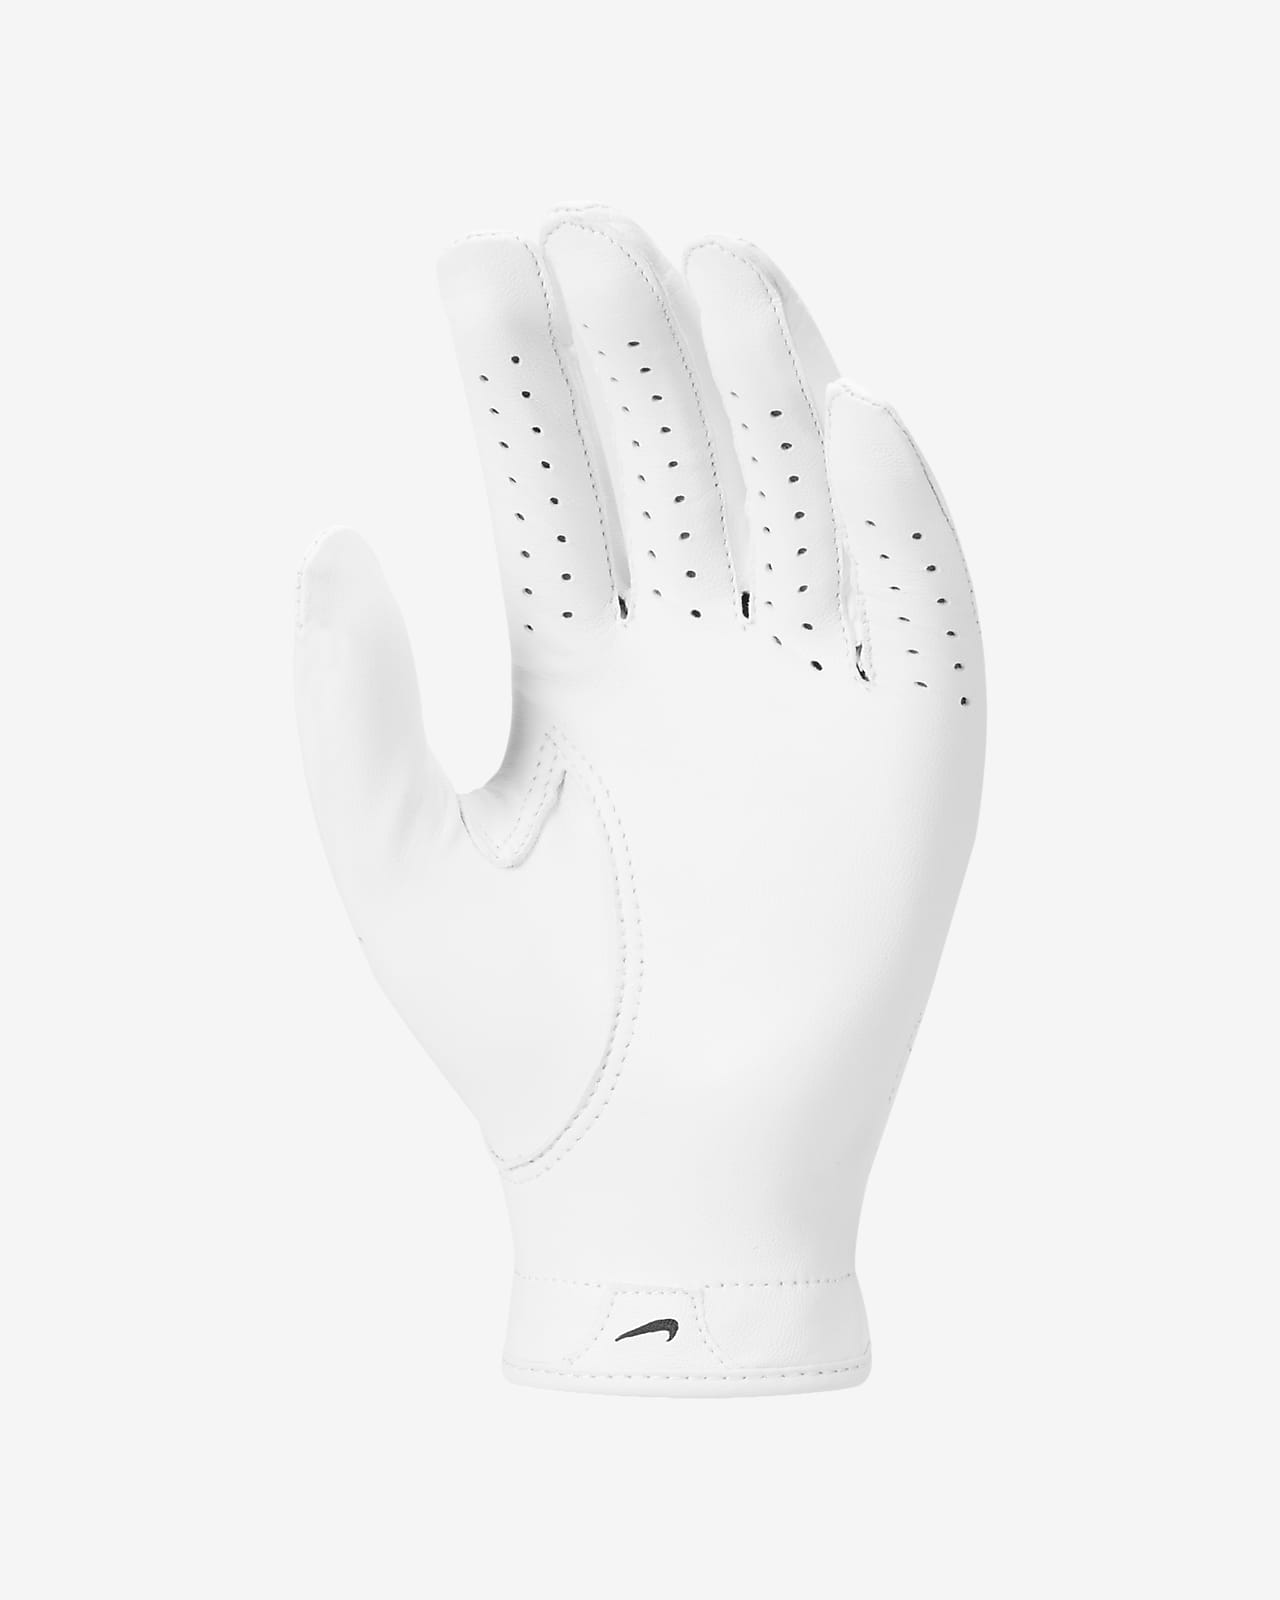 Nike Tour Classic 4 Women's Golf Glove (Left Hand)